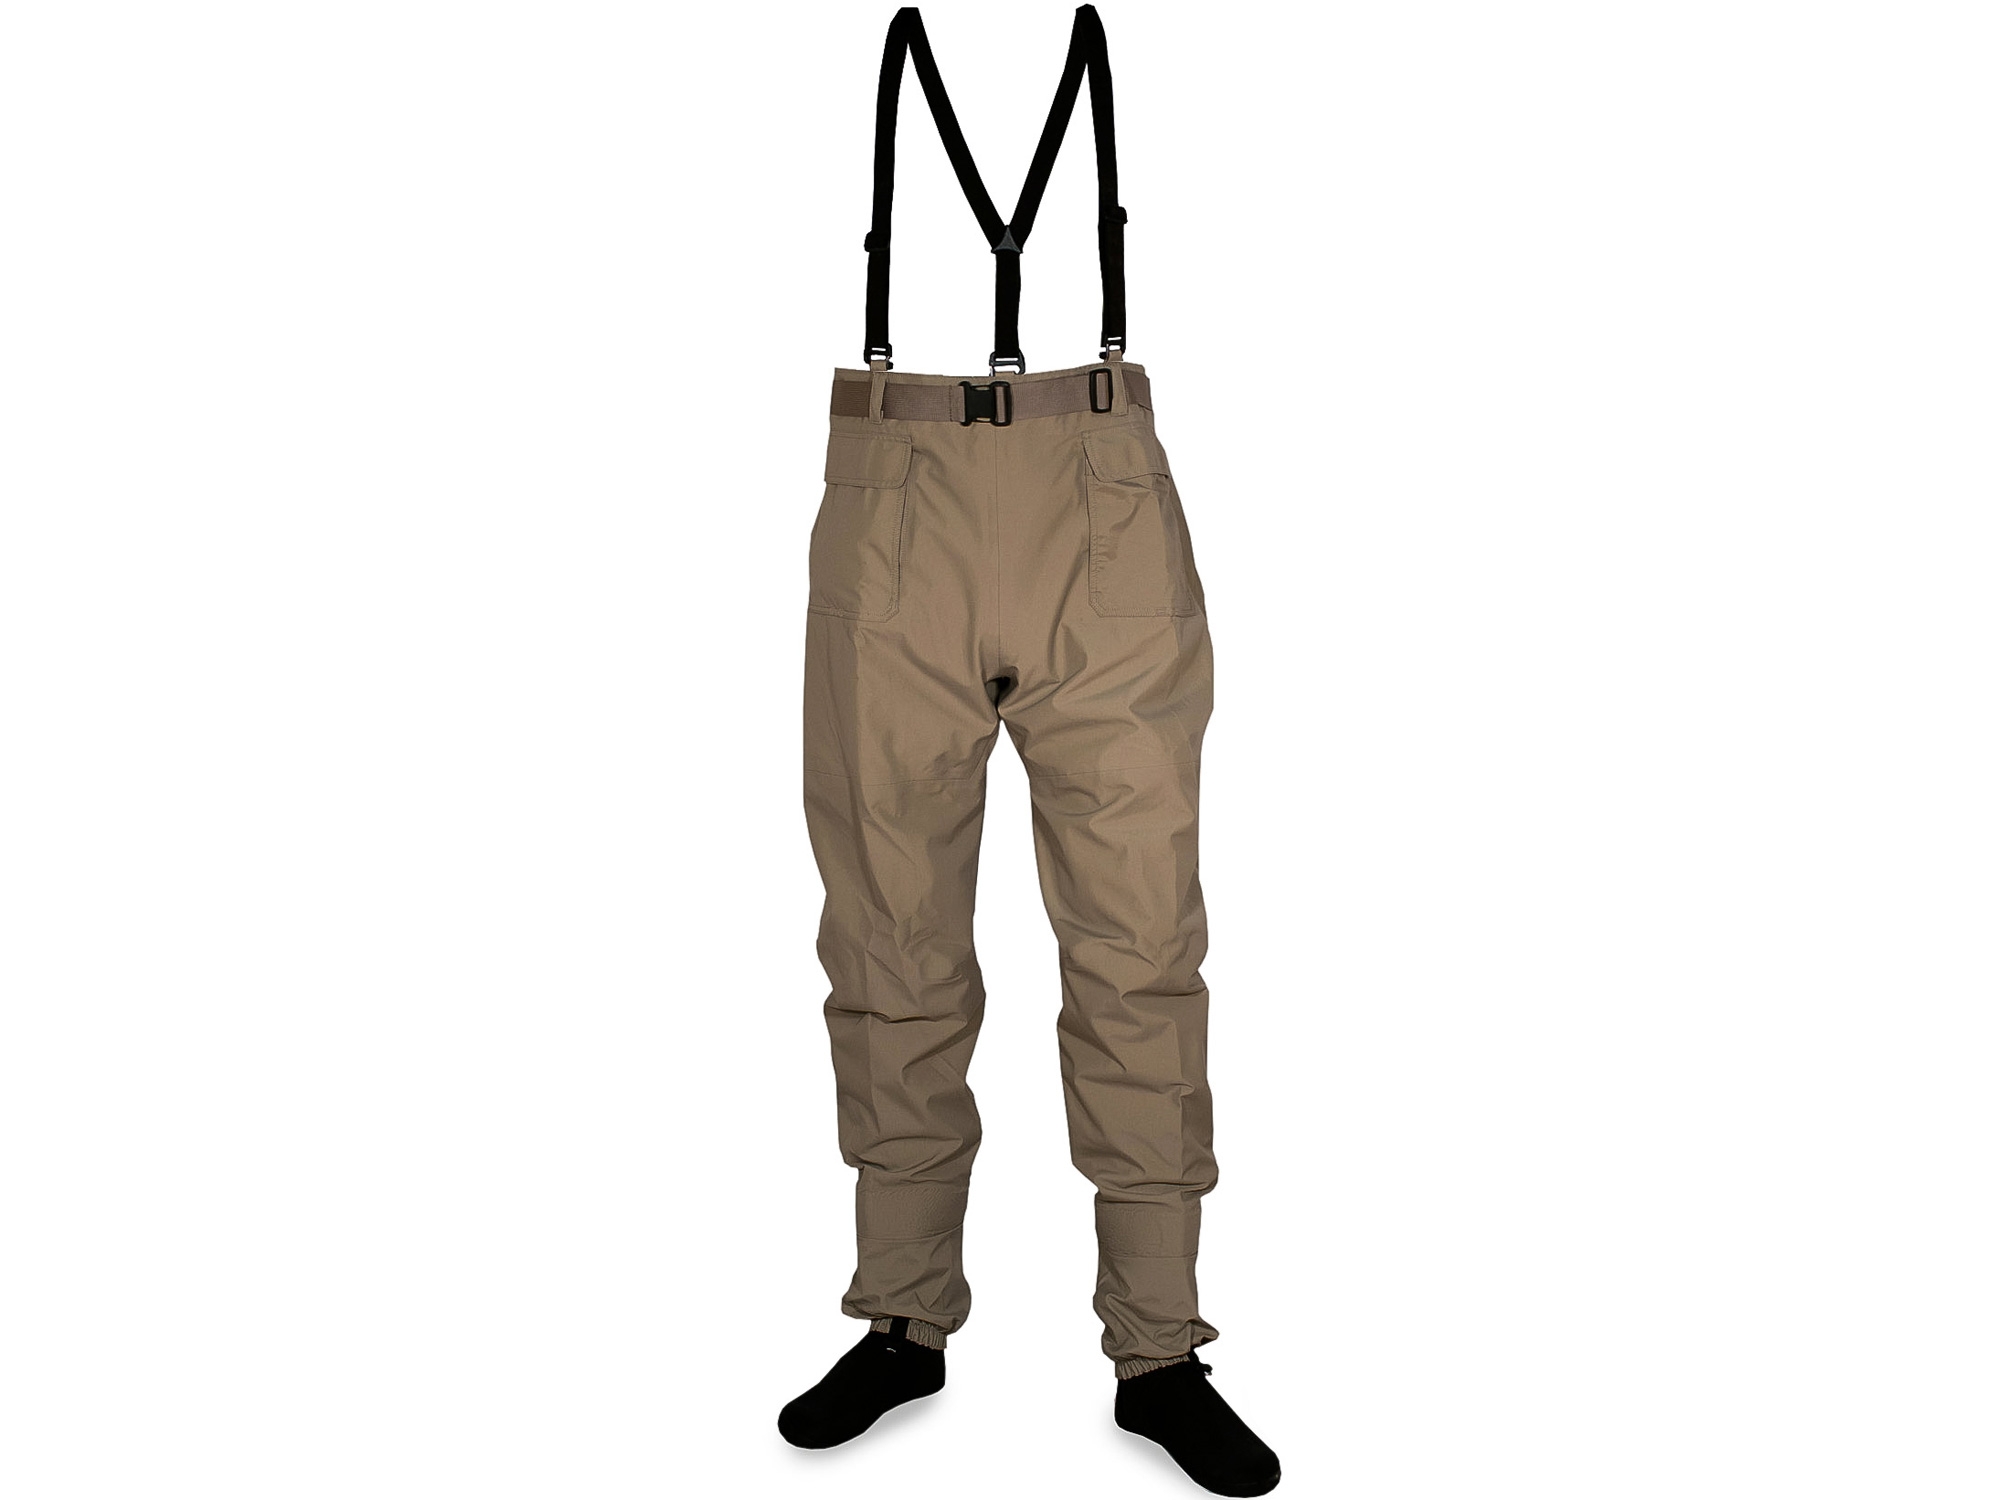 Забродные штаны KOLA-SALMON Concept Waist Waders